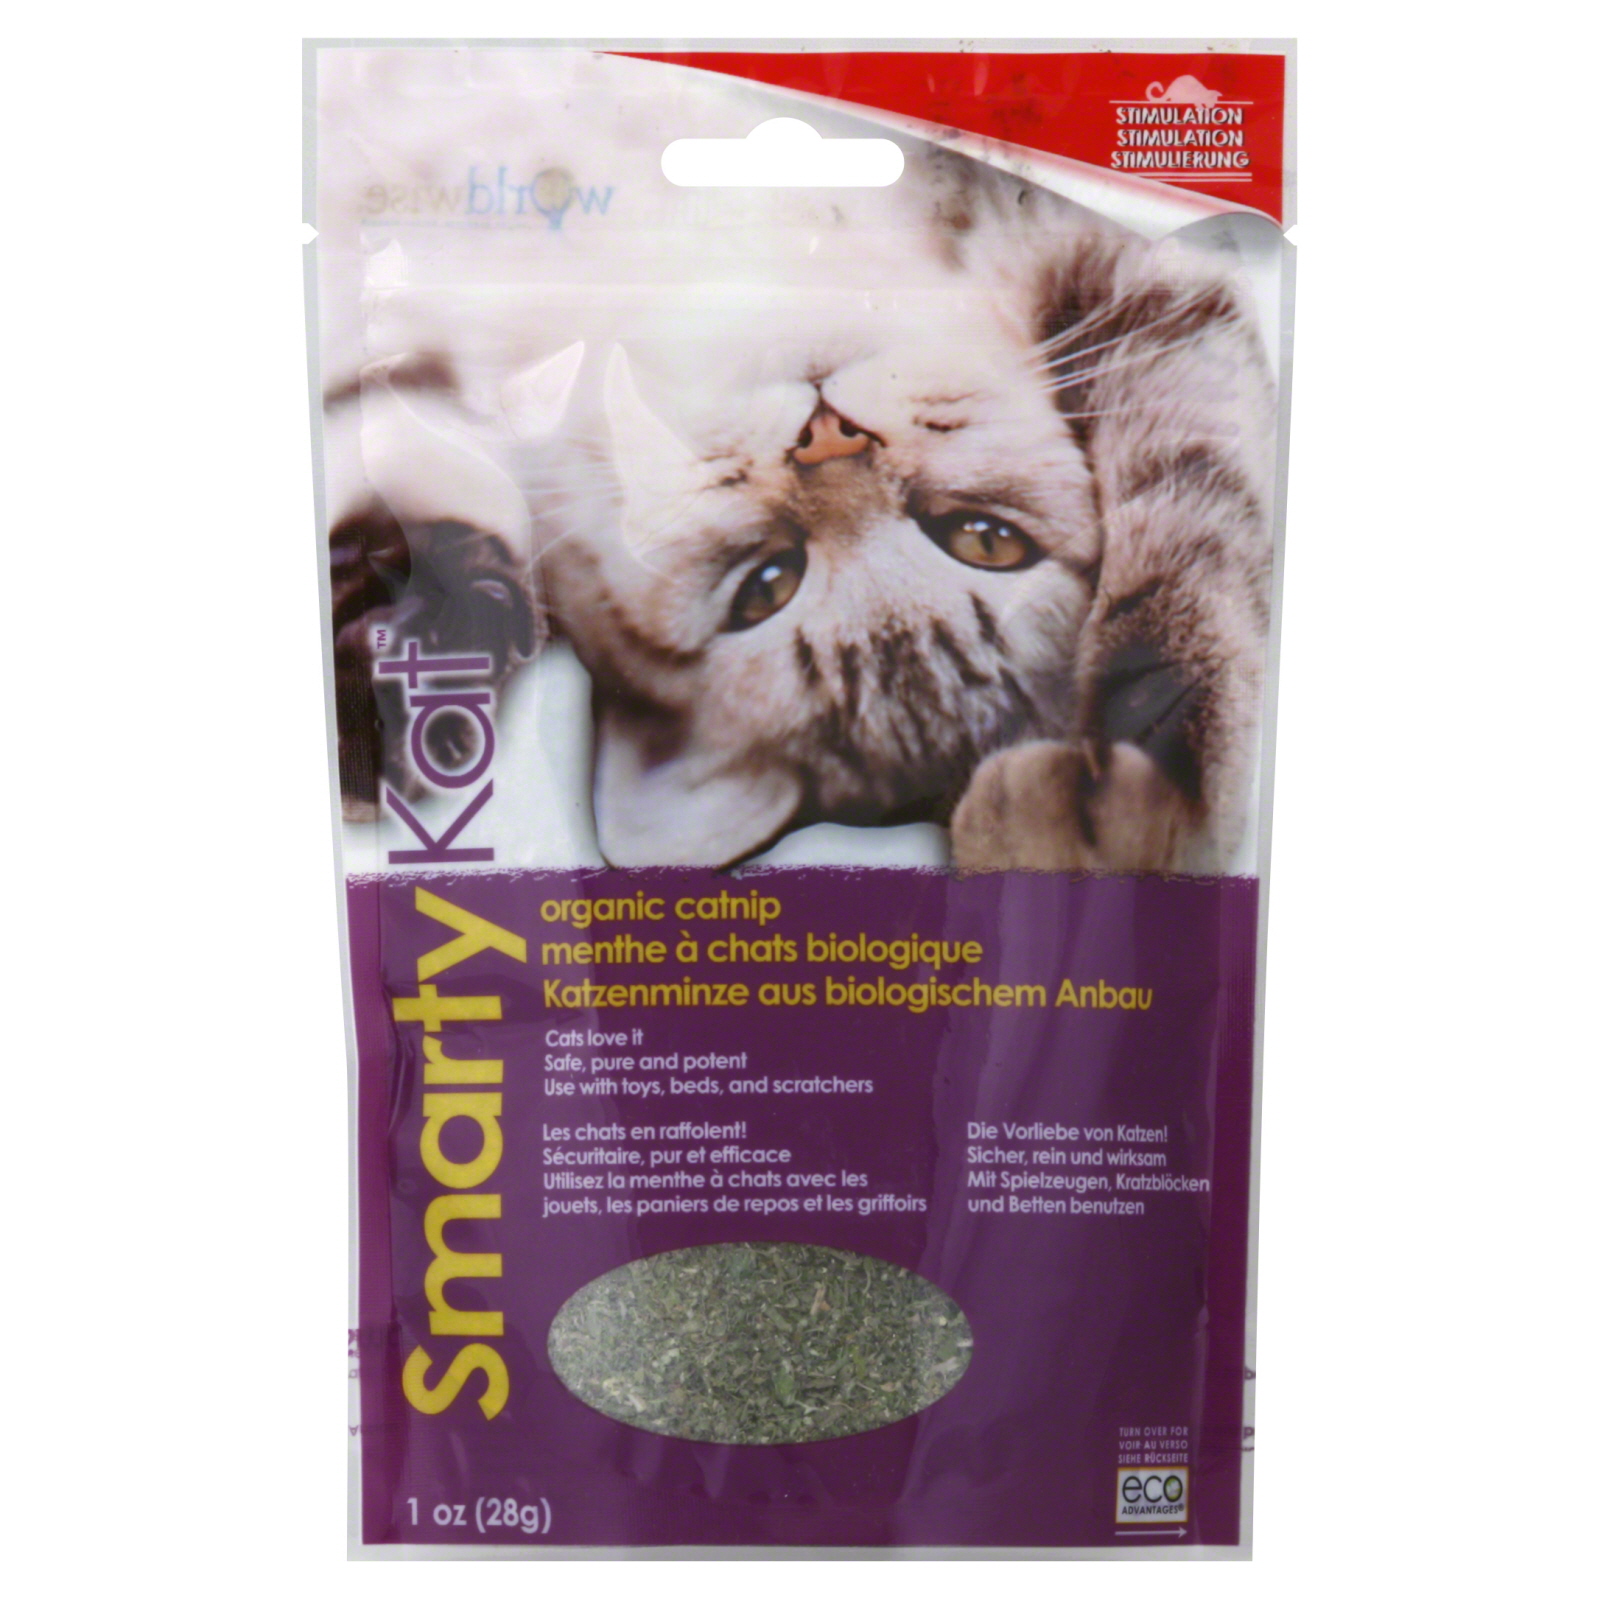 SmartyKat Organic Catnip Only $1.99!